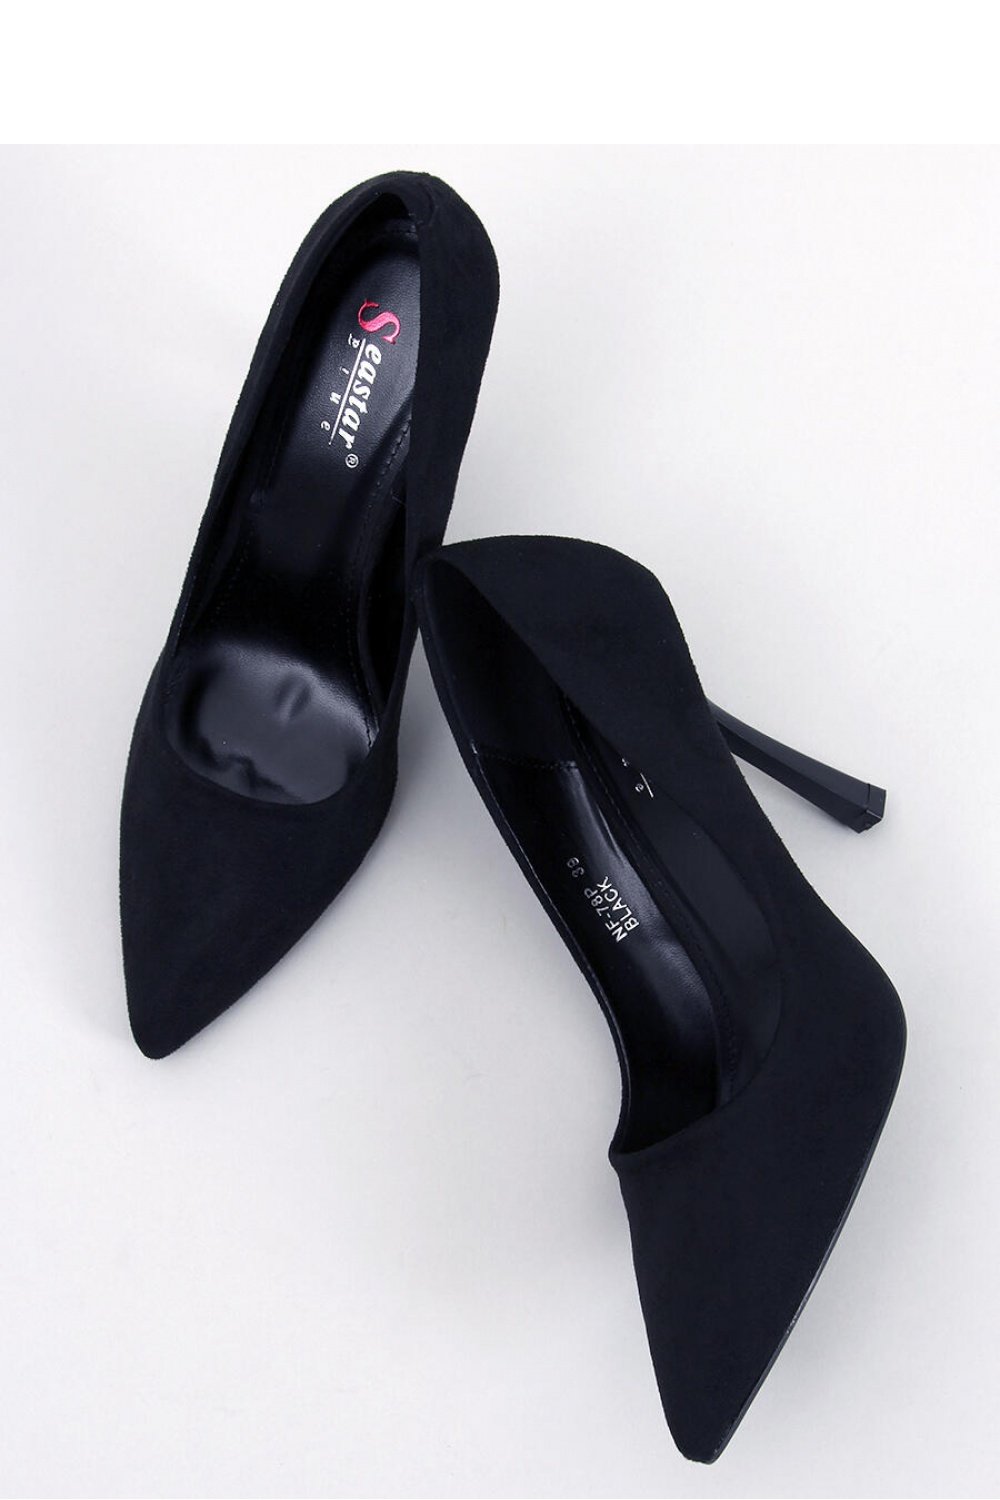  High heels model 177363 Inello  black